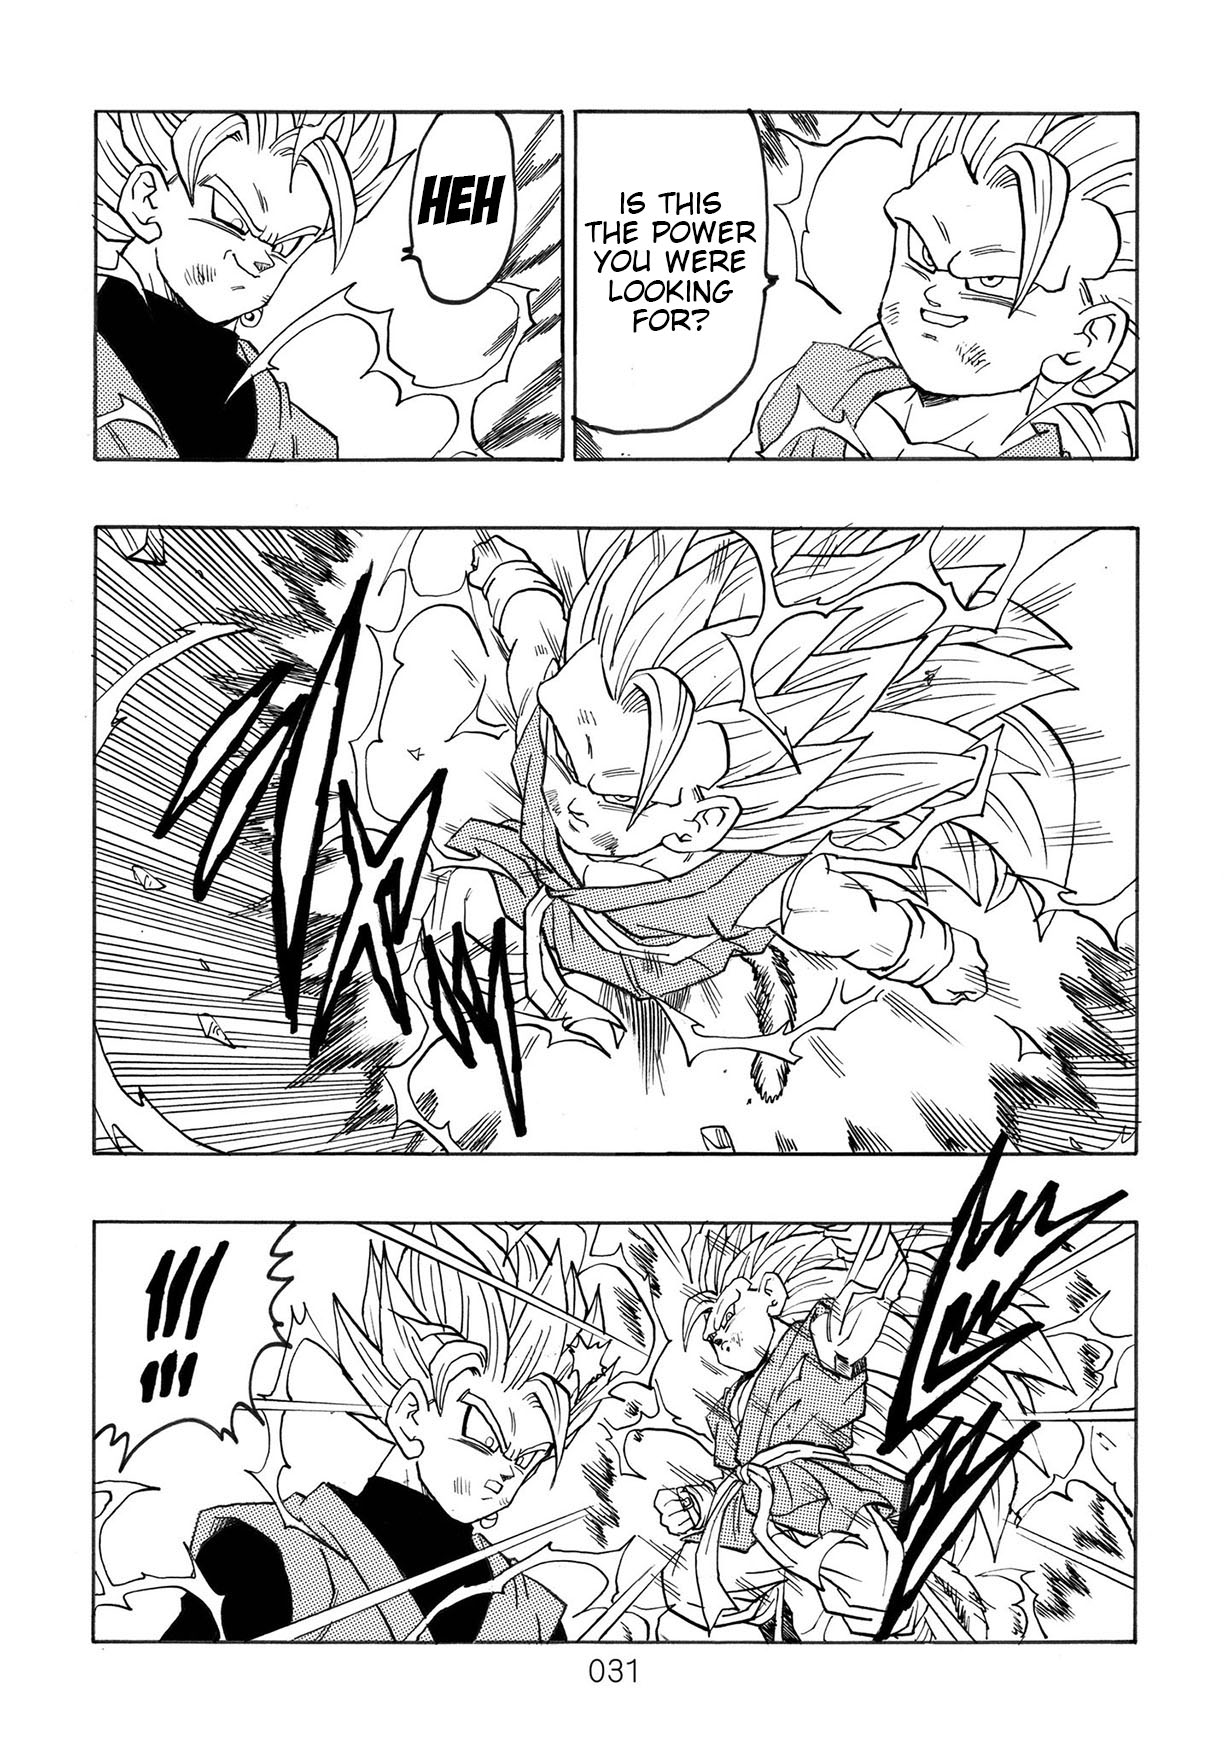 Dragon Ball DBVS (Doujinshi) Vol. 1 Goku Black vs Super Saiyan 4!!